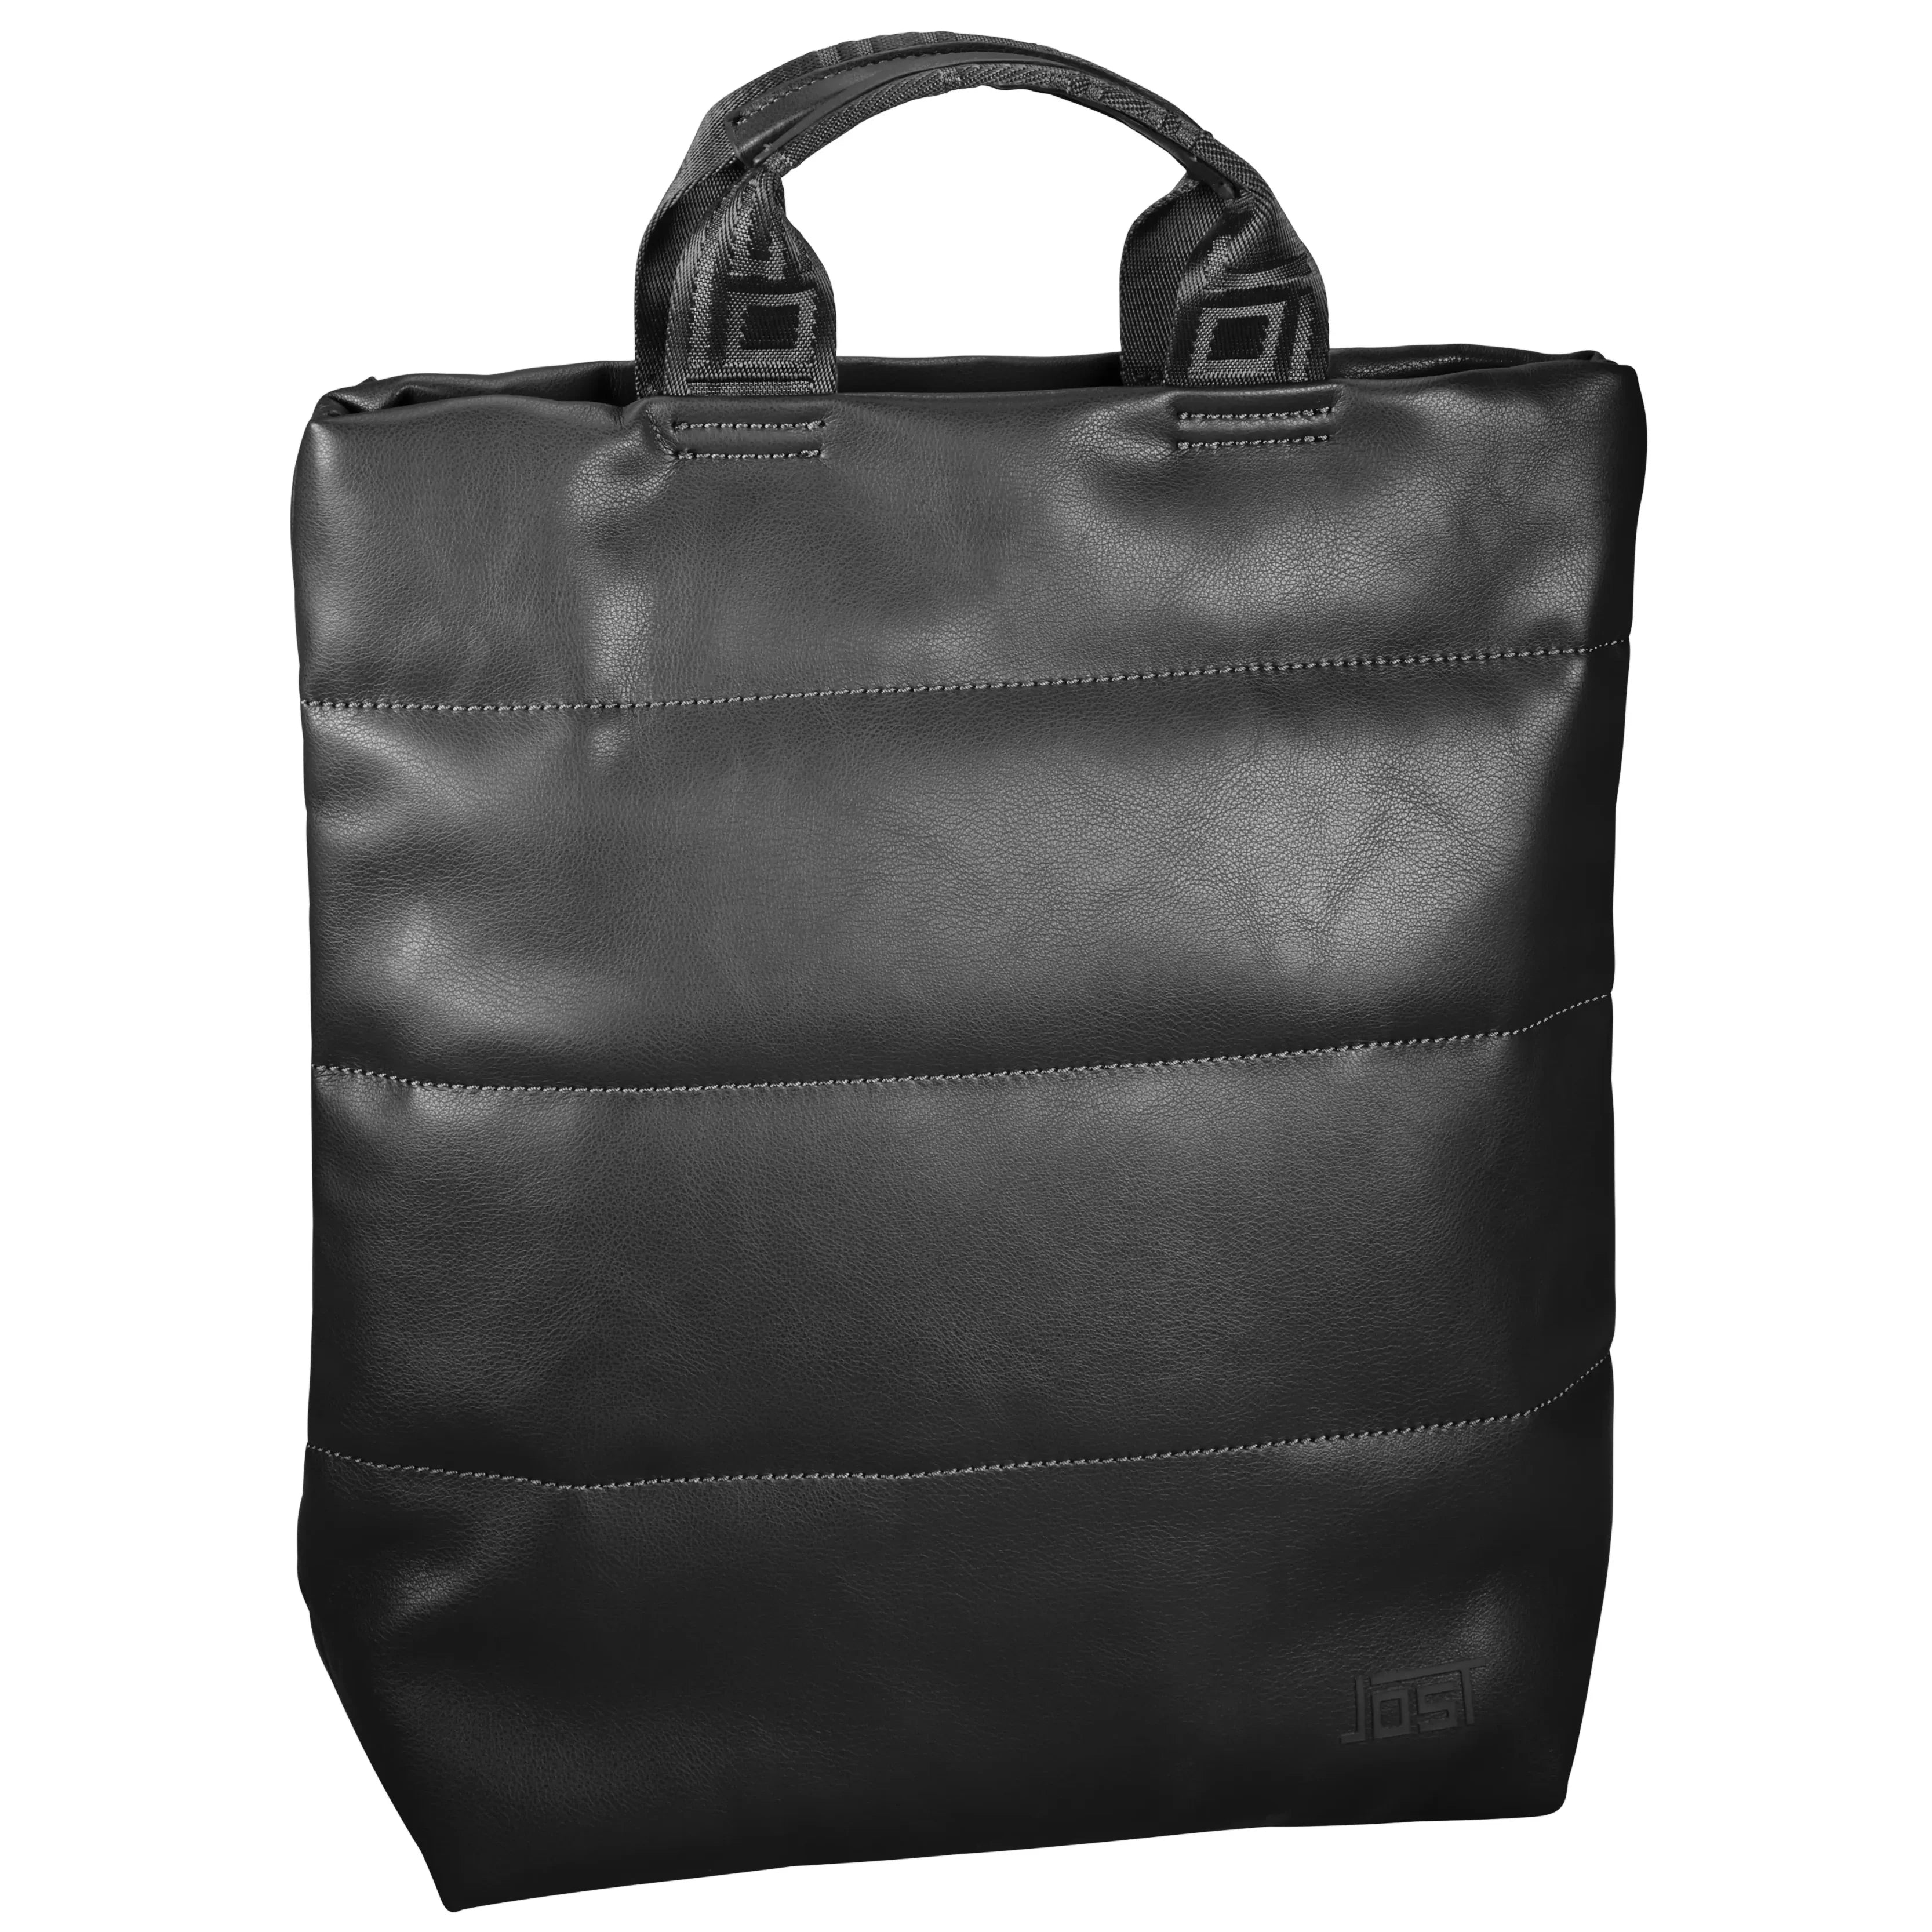 Jost Kaarina X-Change Bag XS 35 cm - Taupe